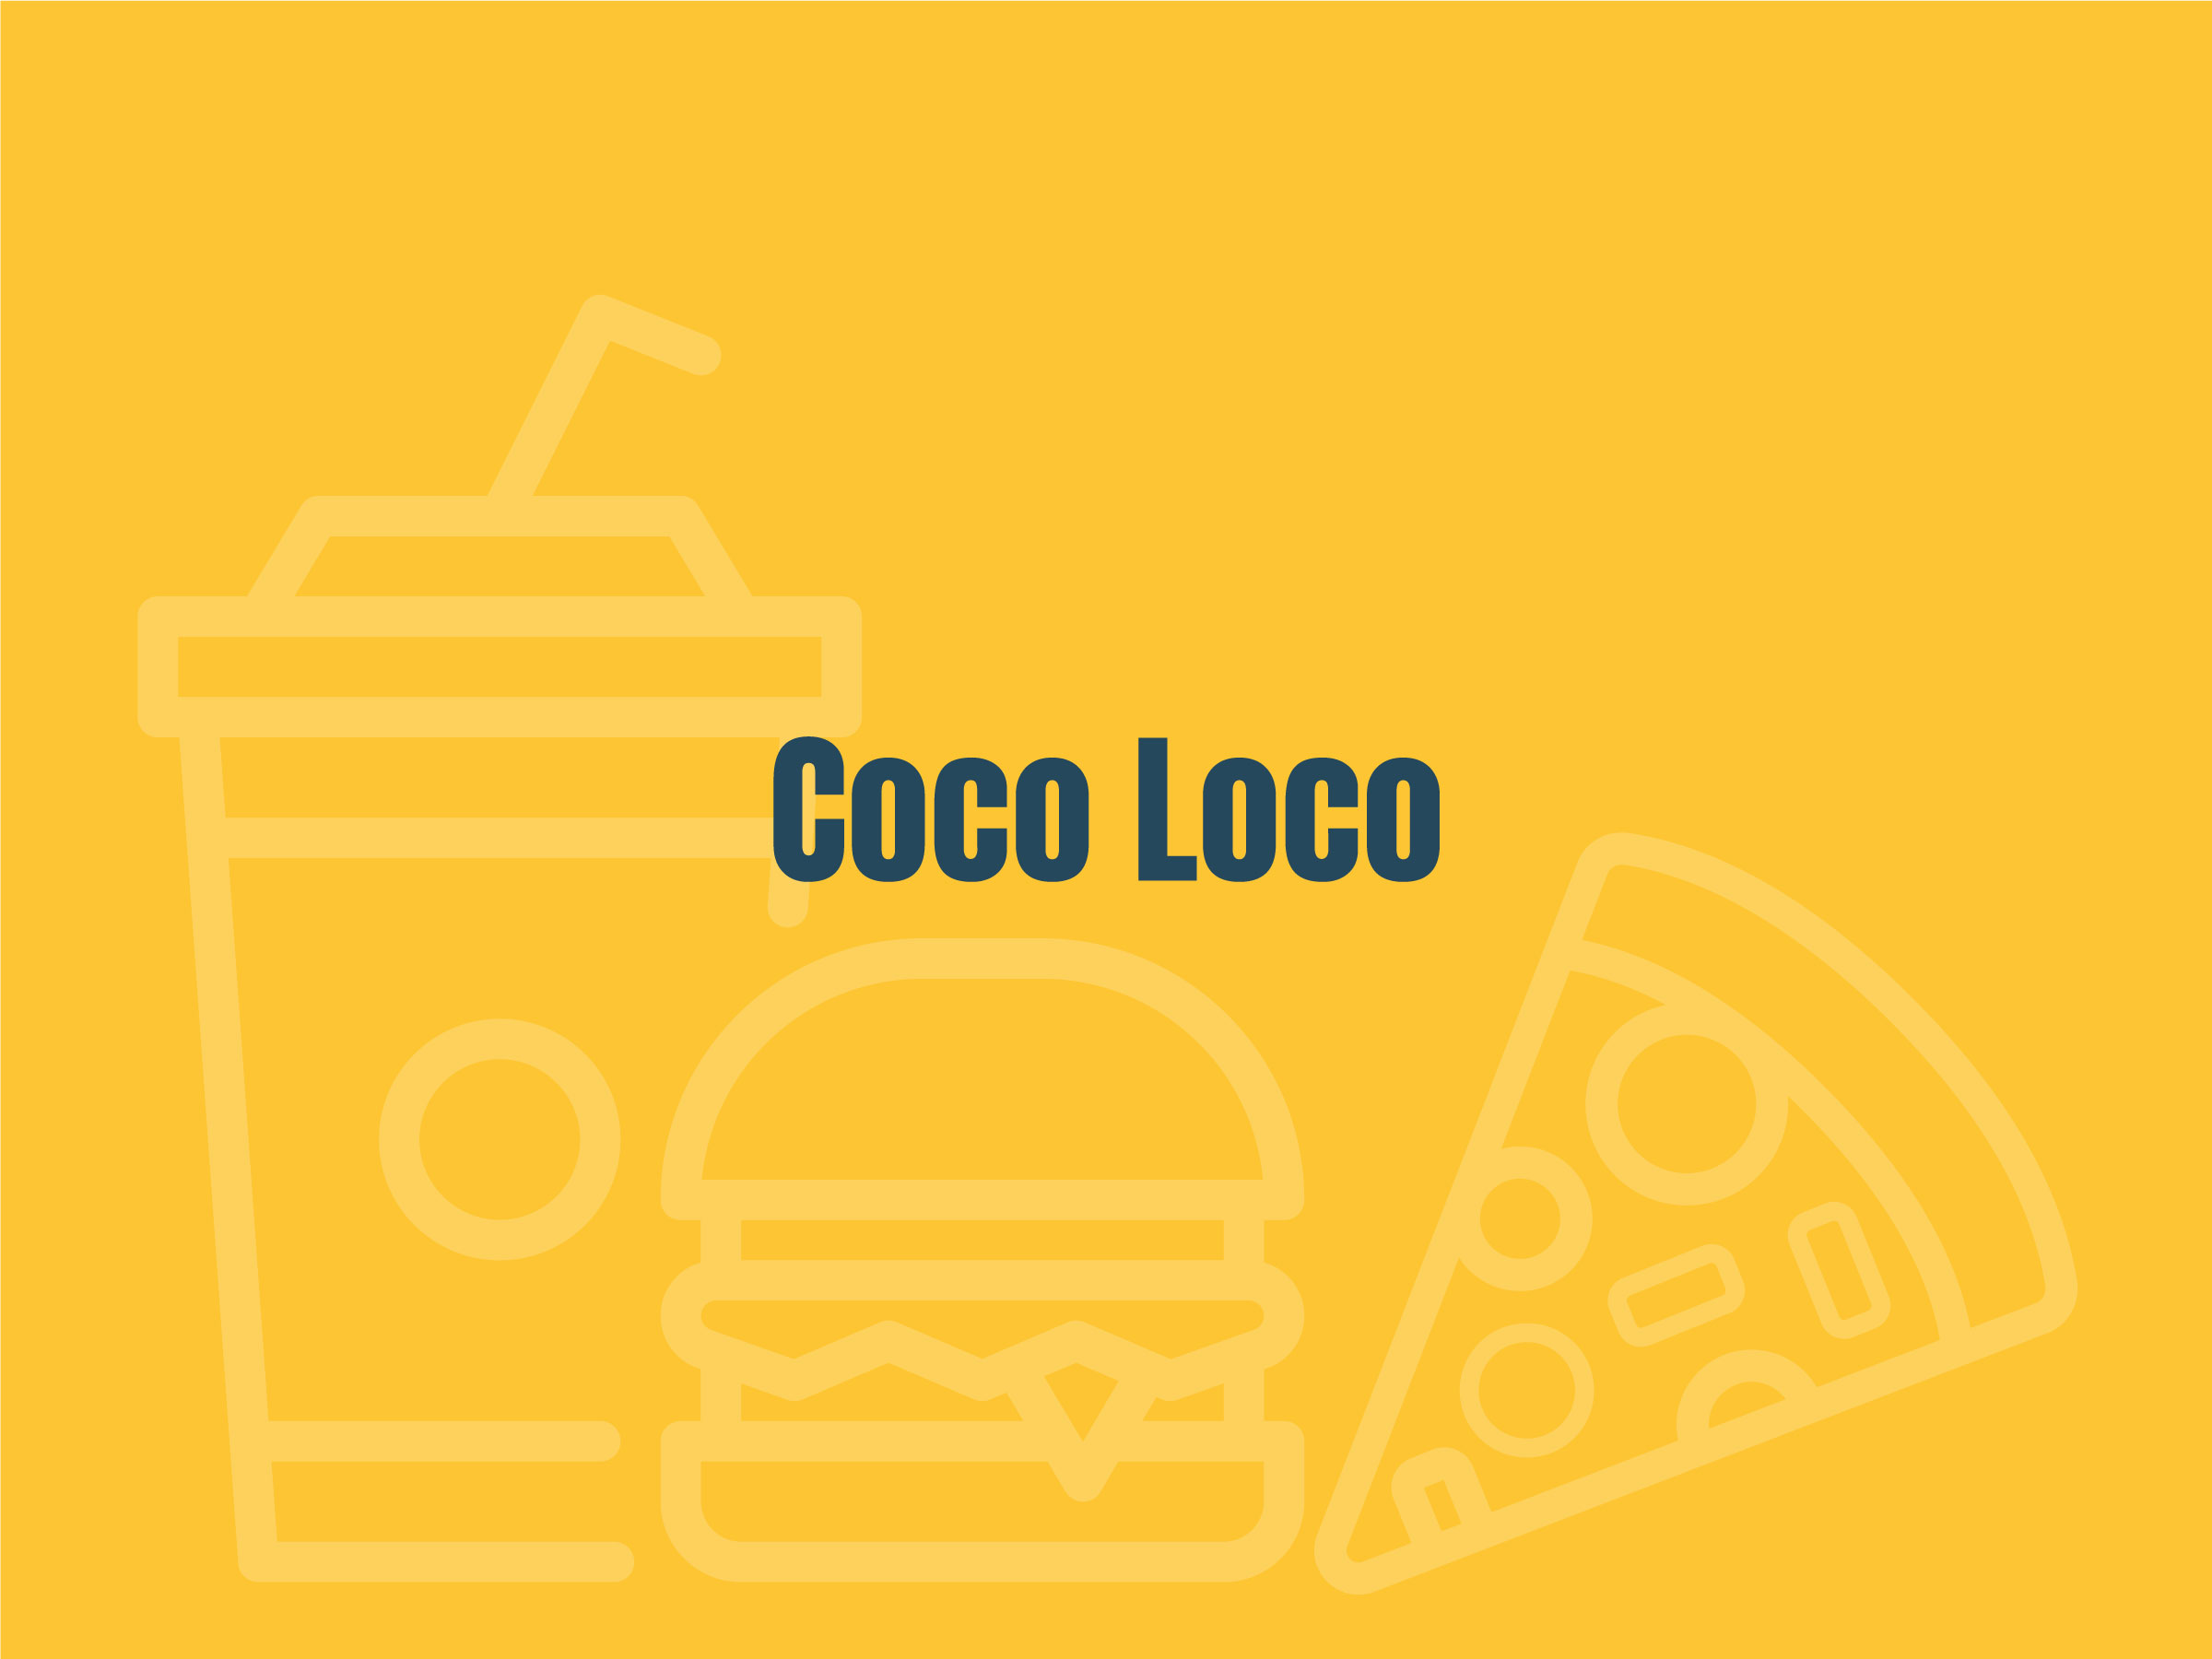 Coco Loco Mirabeach Restaurants main